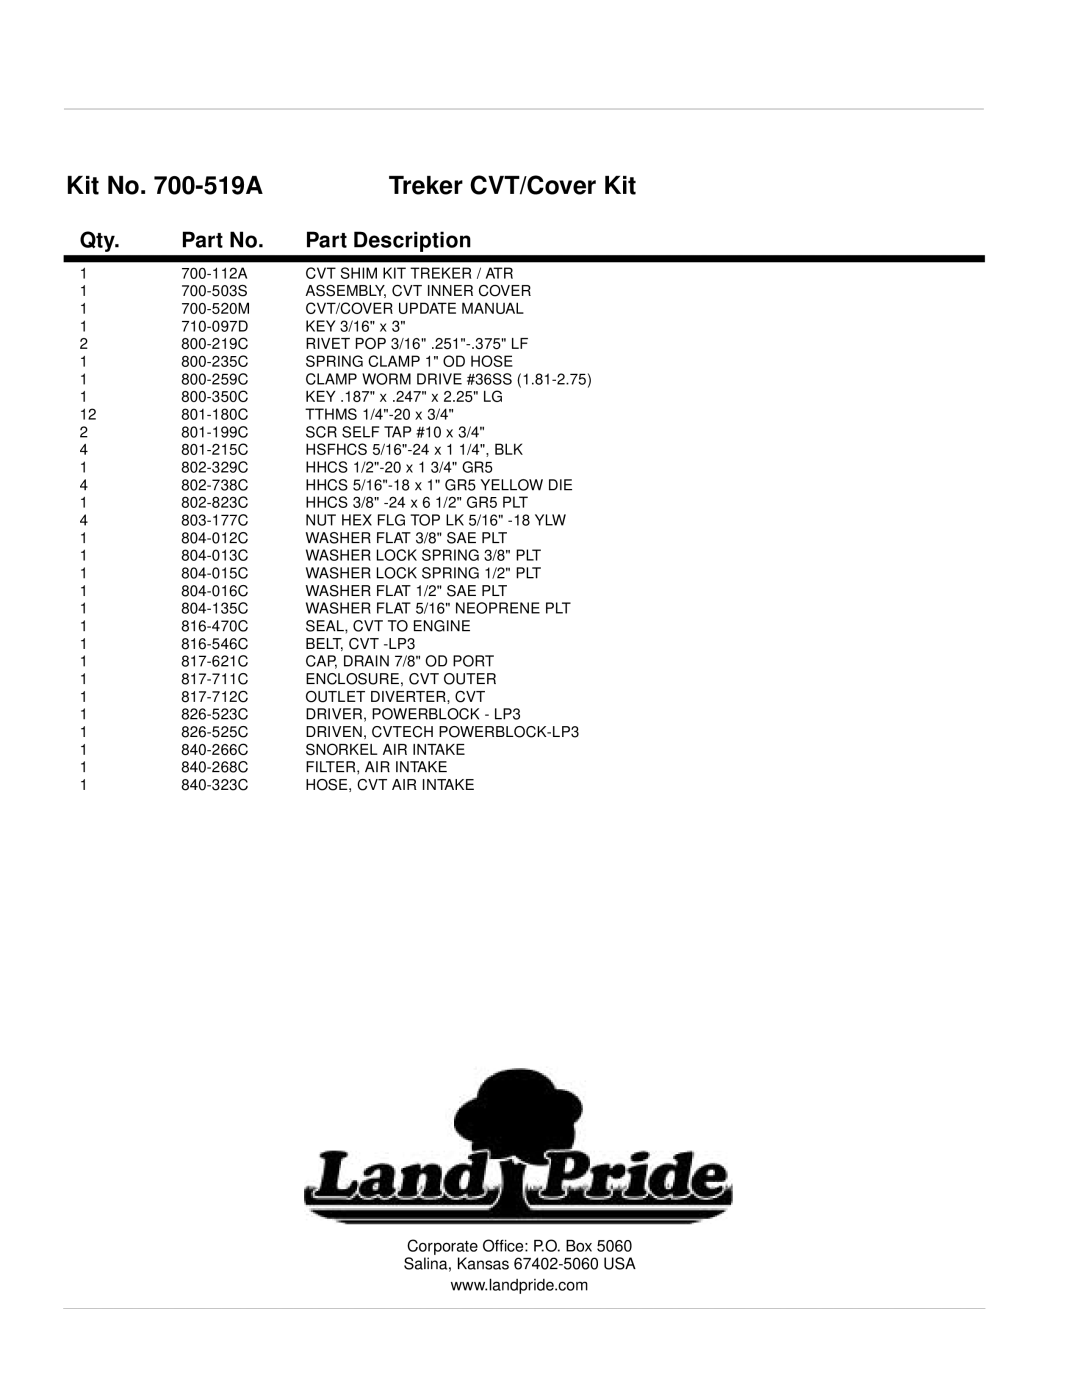 Land Pride 4210 Kit No. 700-519A, Treker CVT/Cover Kit, Part Description, Corporate Ofﬁce P.O. Box 